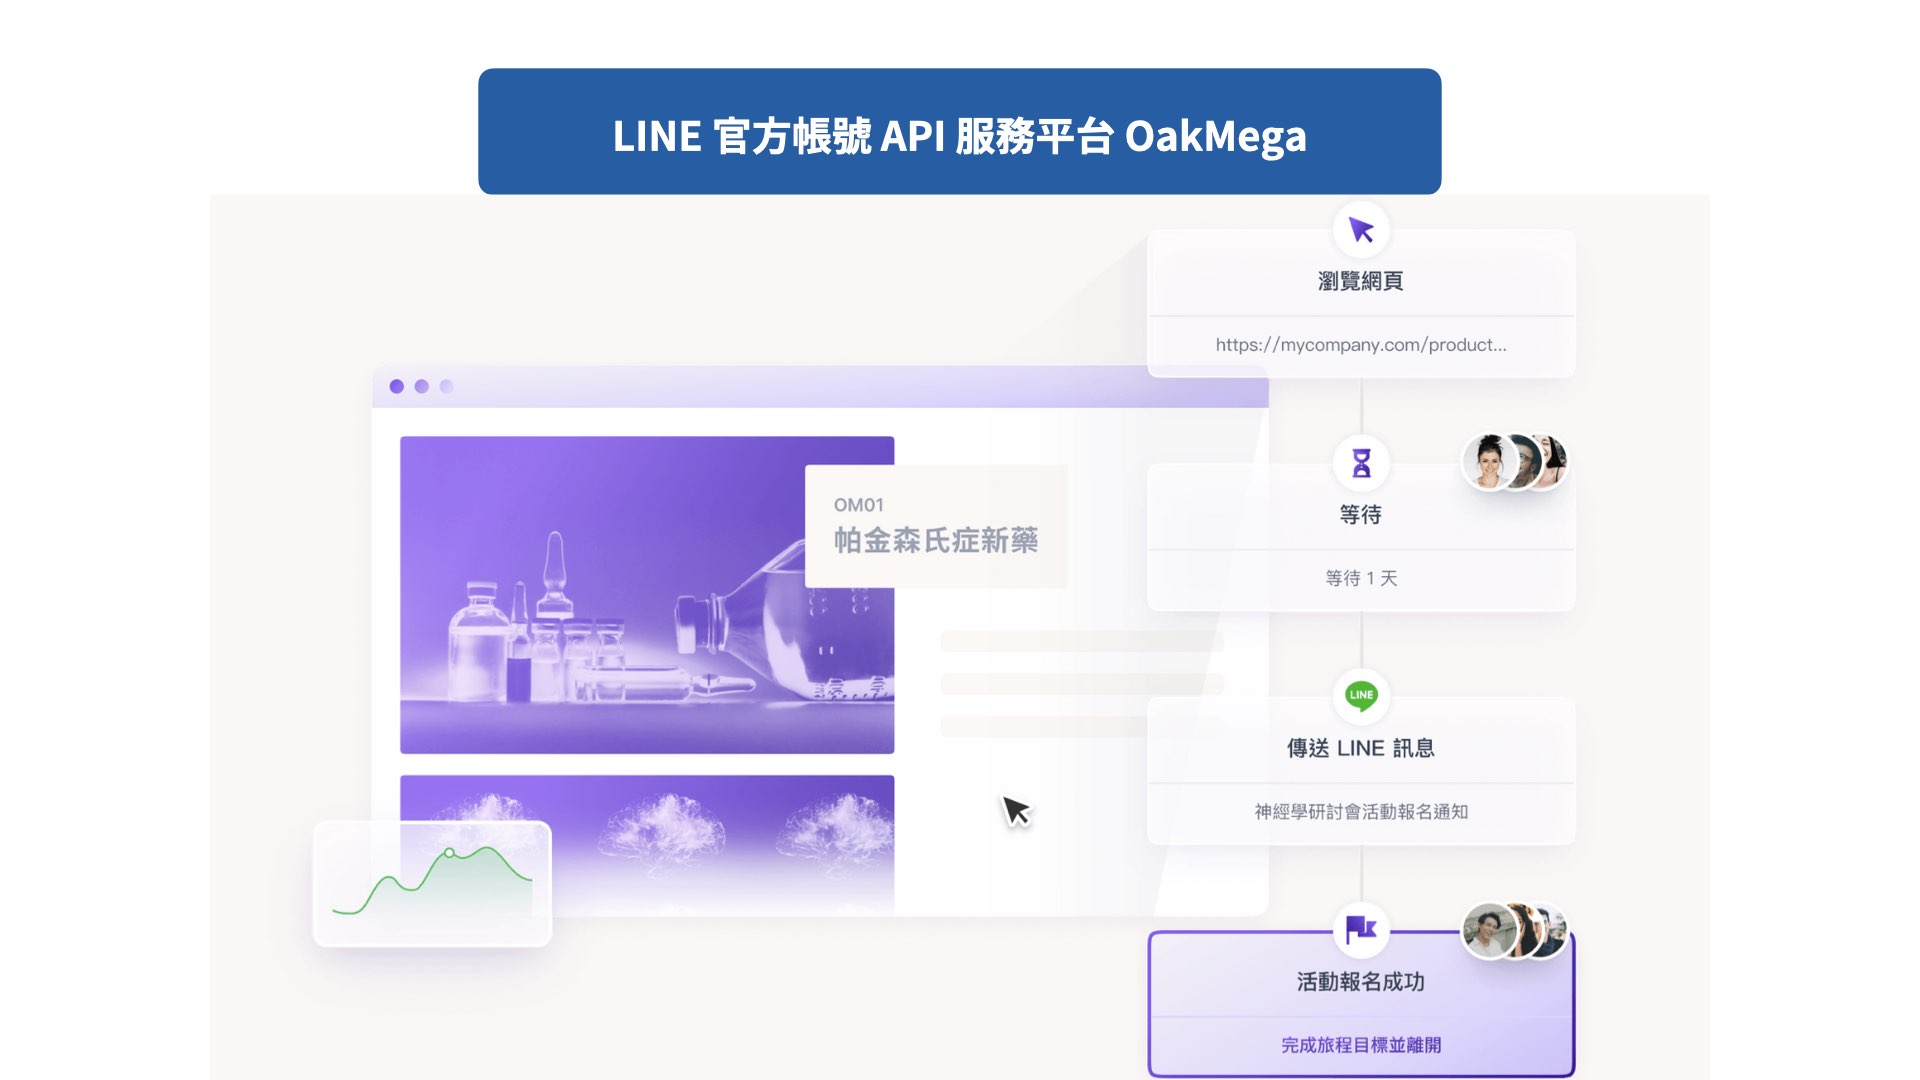 LINE官方帳號API 服務平台 OakMega